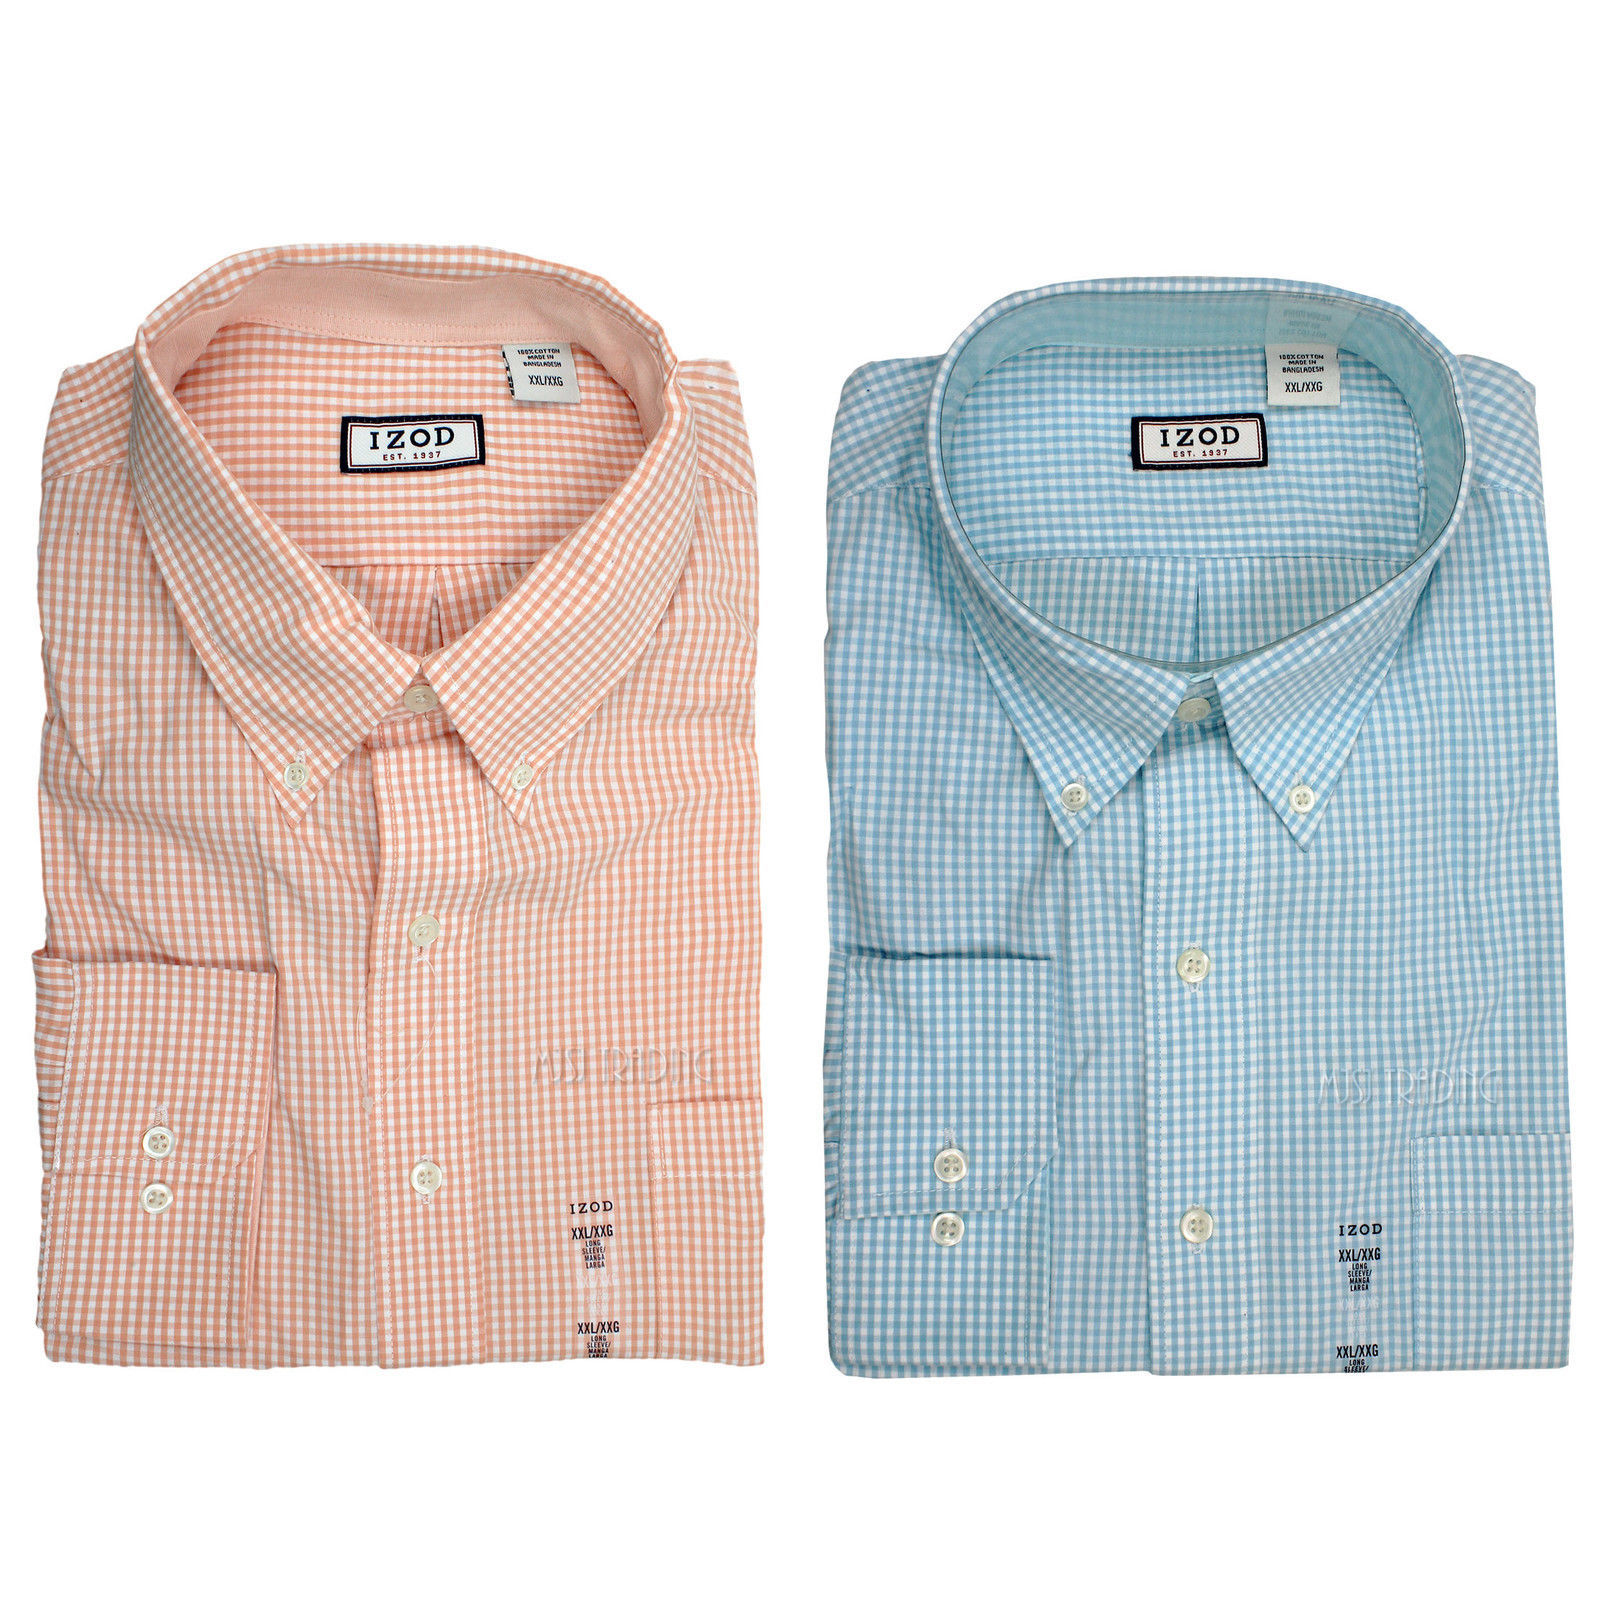 Primary image for NWT IZOD Men Long Sleeve Gingham Plaid Shirt Soft 100% Cotton Size 2XL XXL $55